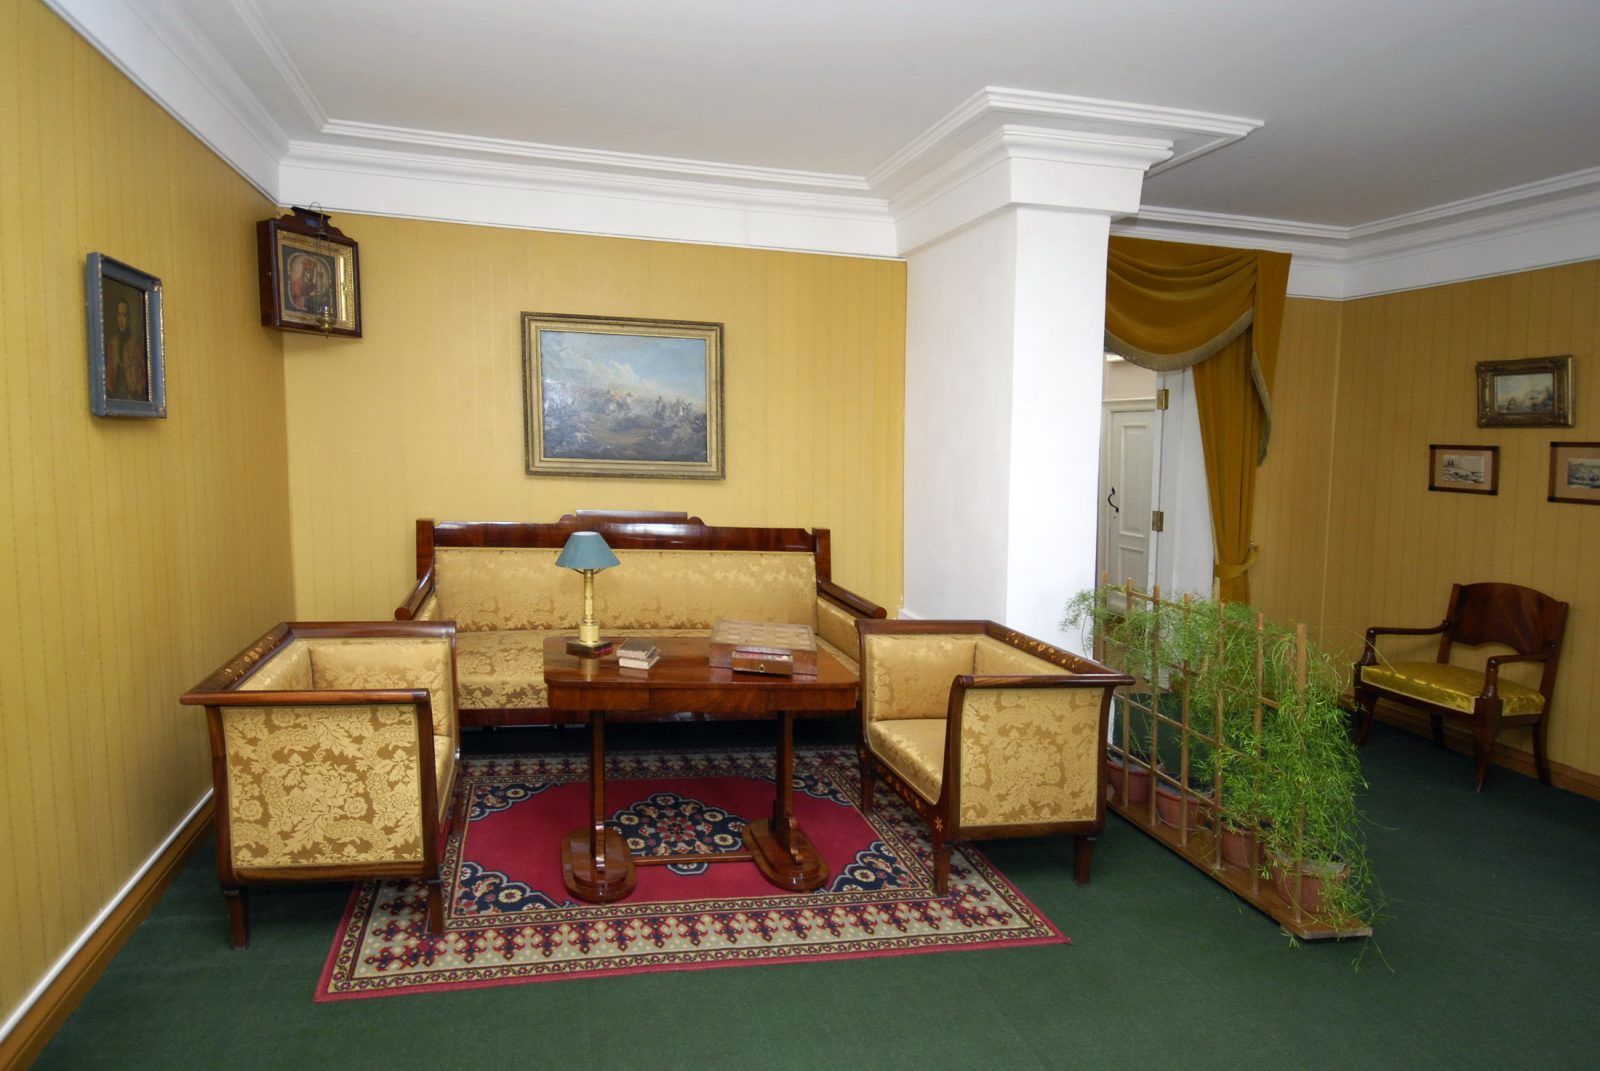 Барский дом: комната М.Ю. Лермонтова